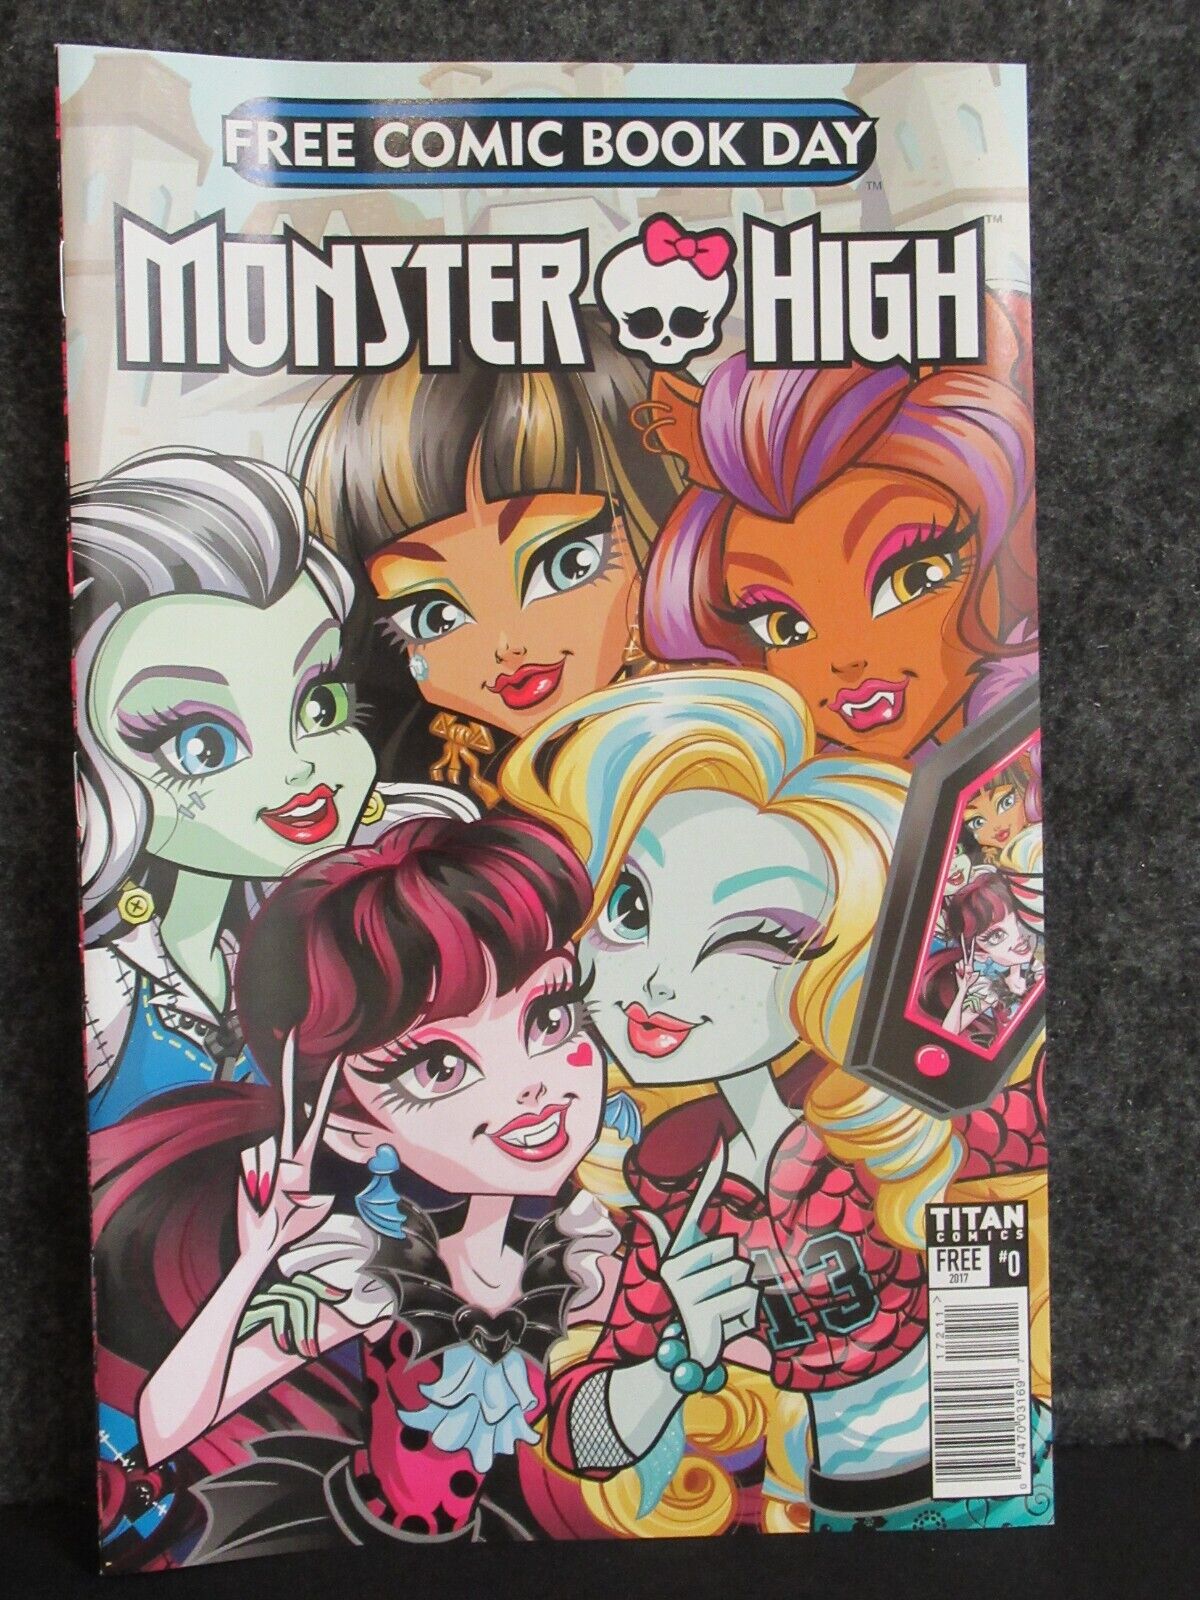 Monster High #0 Free Comic Book Day 2017 Titan Comics 1st Monster High